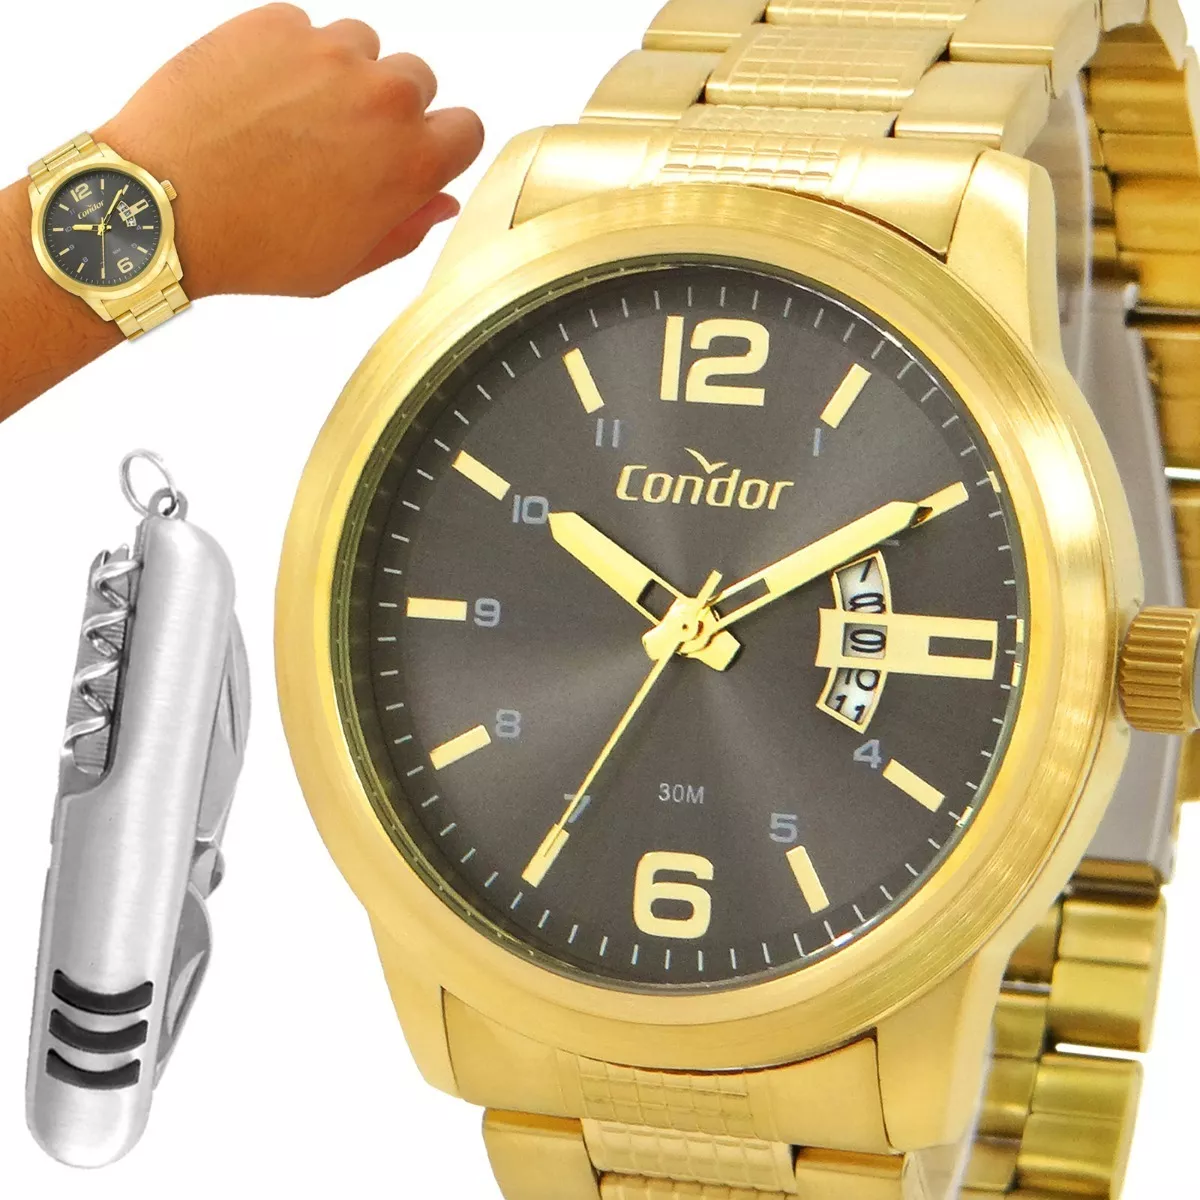 Relógio Masculino Dourado Condor Ouro 18k Garantia Original